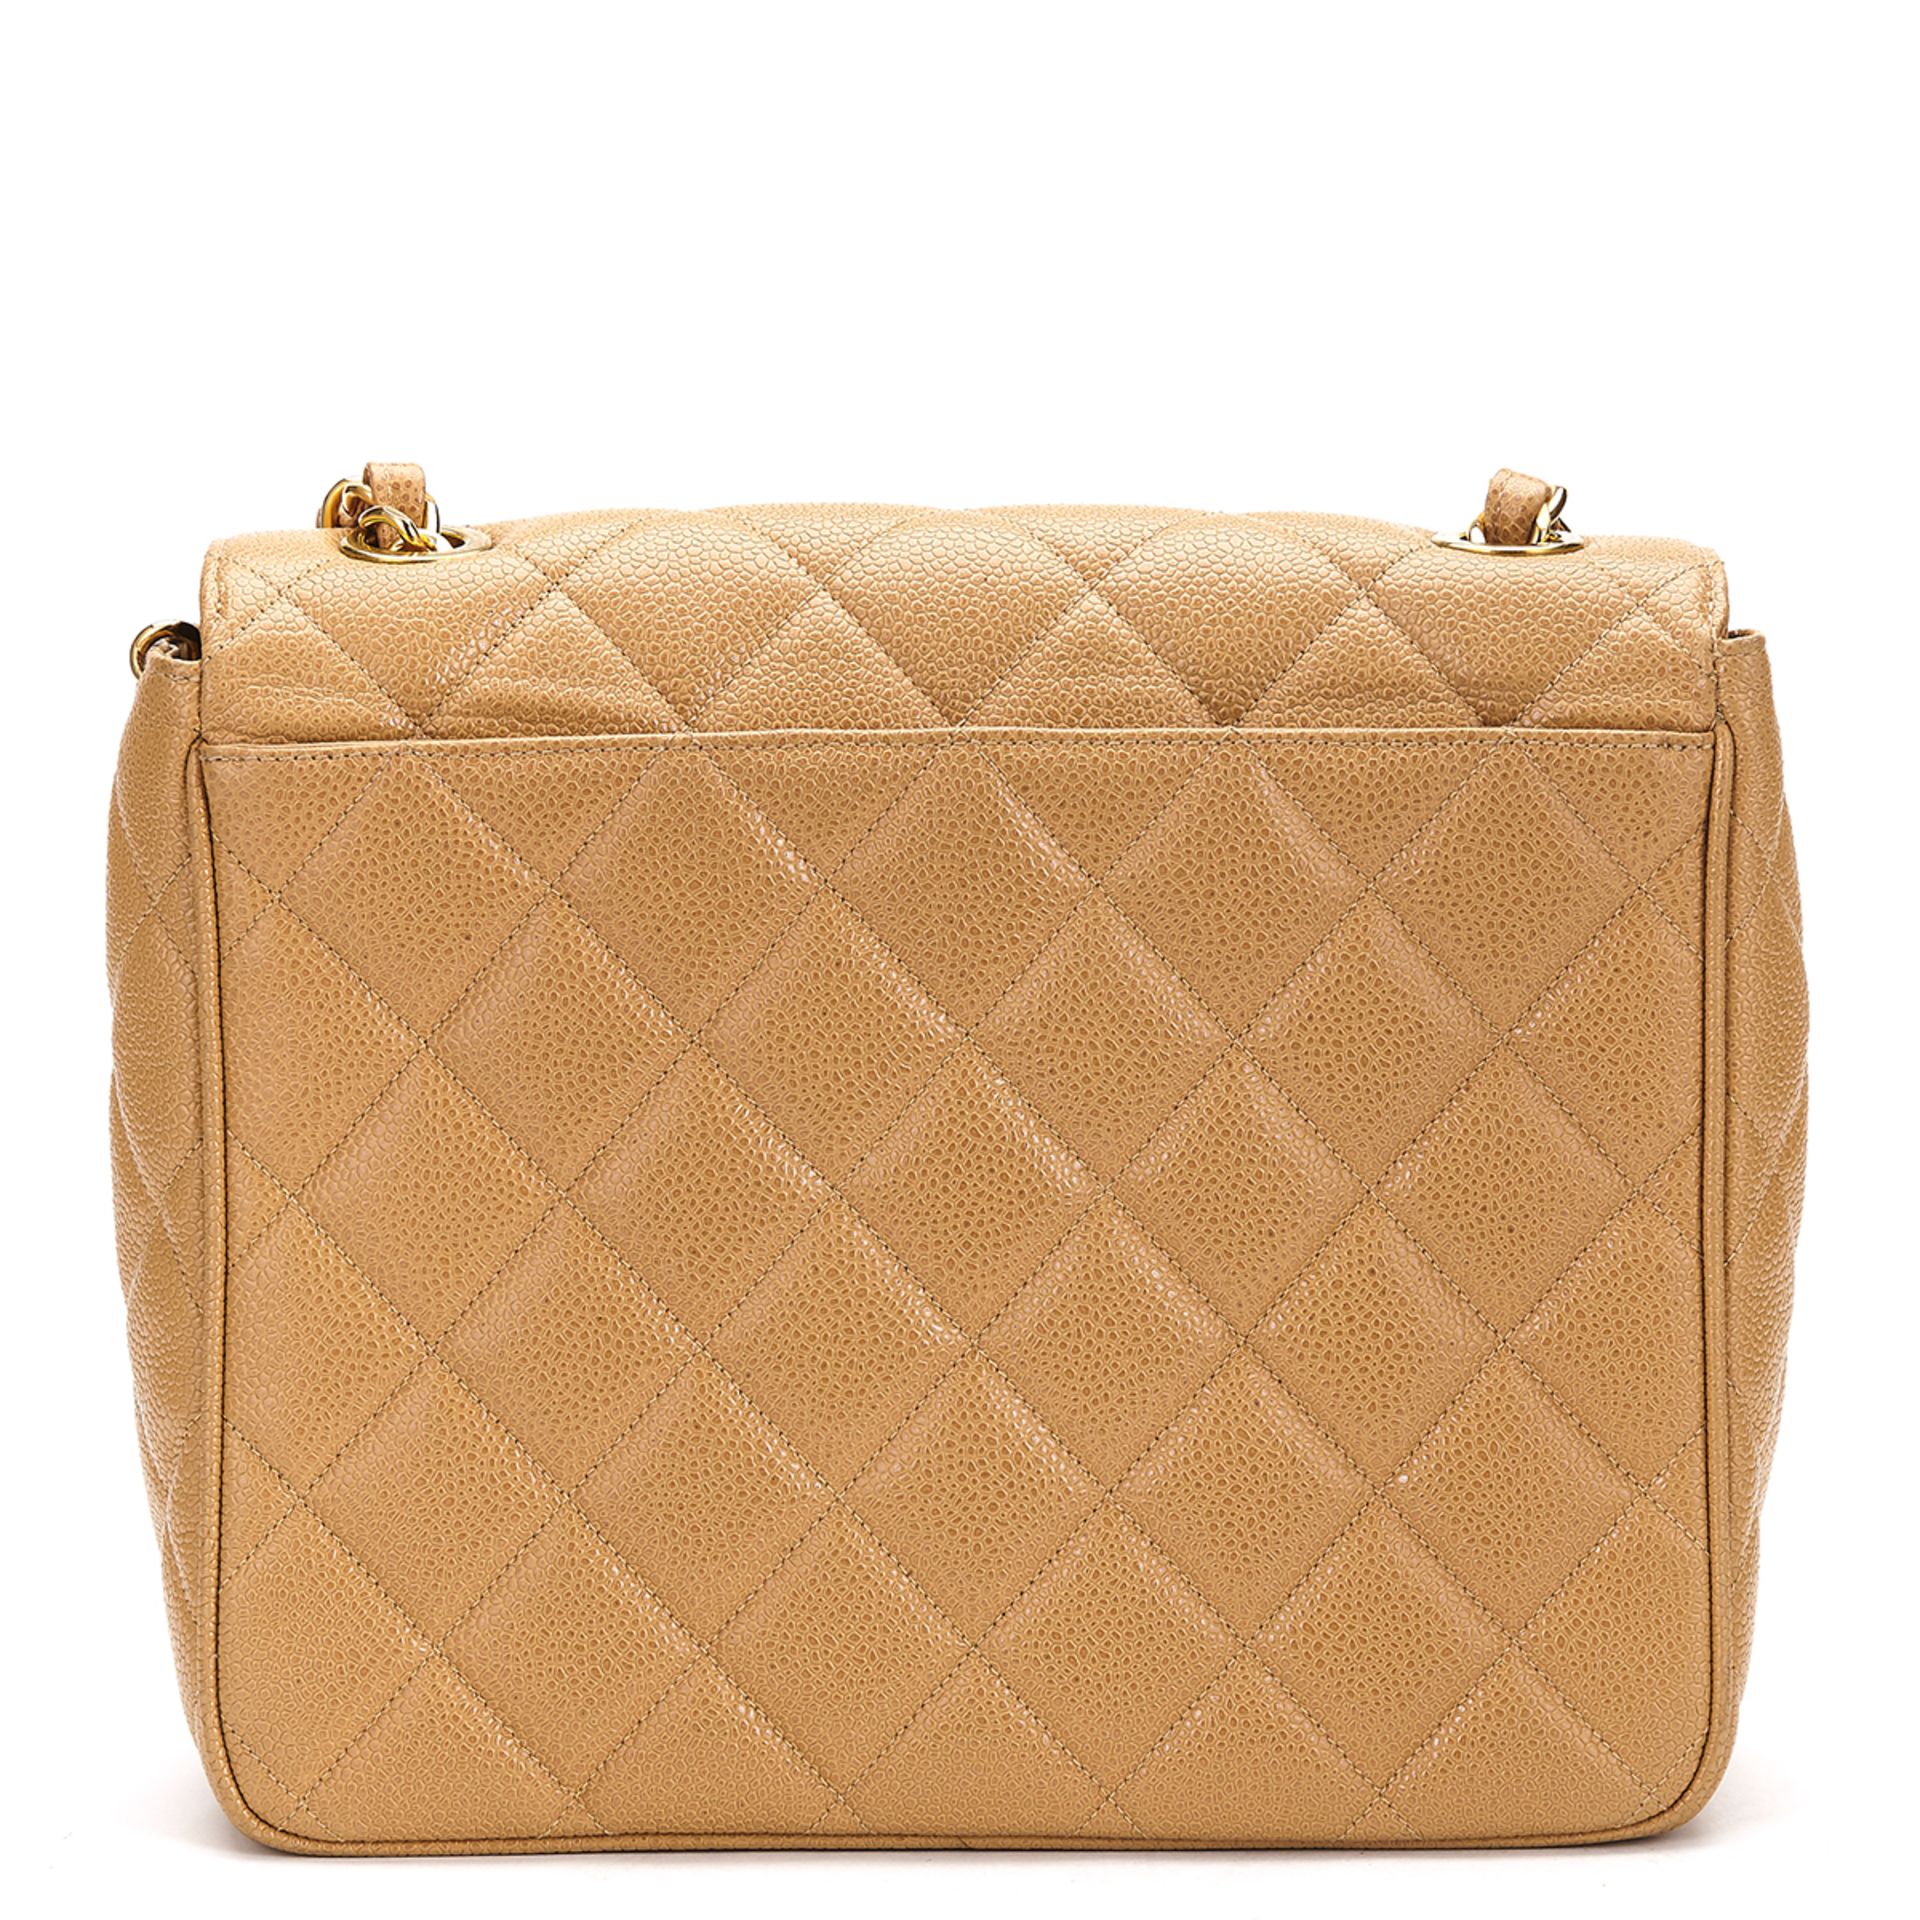 Chanel, Single Flap Bag - Image 4 of 10